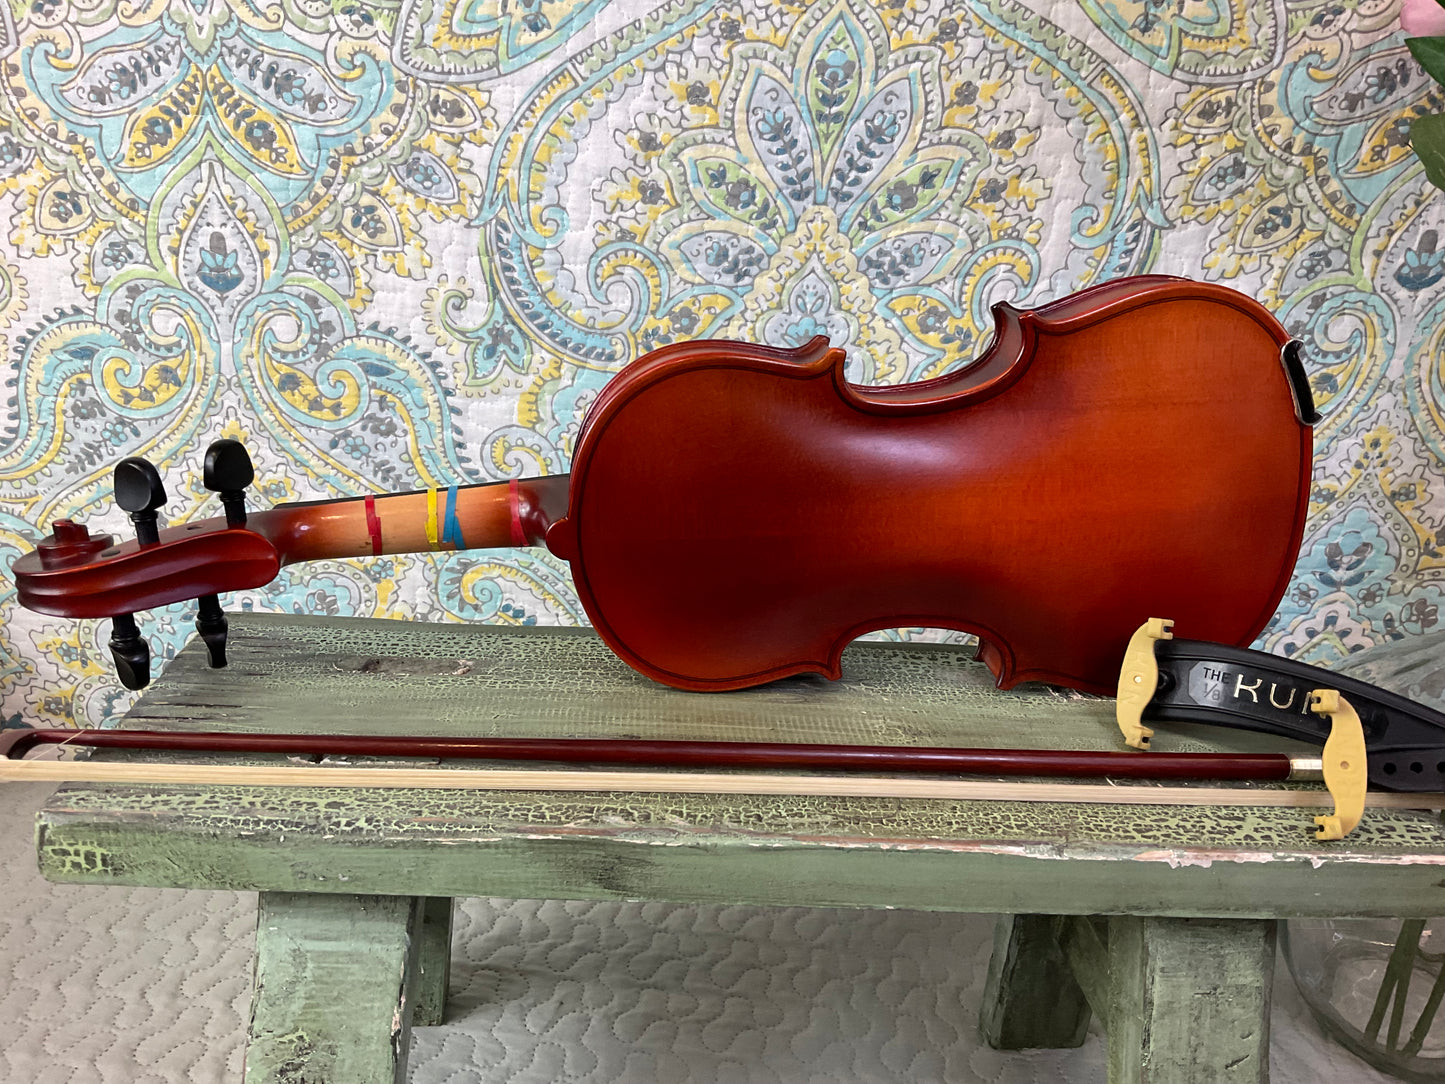 Becker Stringed Instruments Violin, model 175